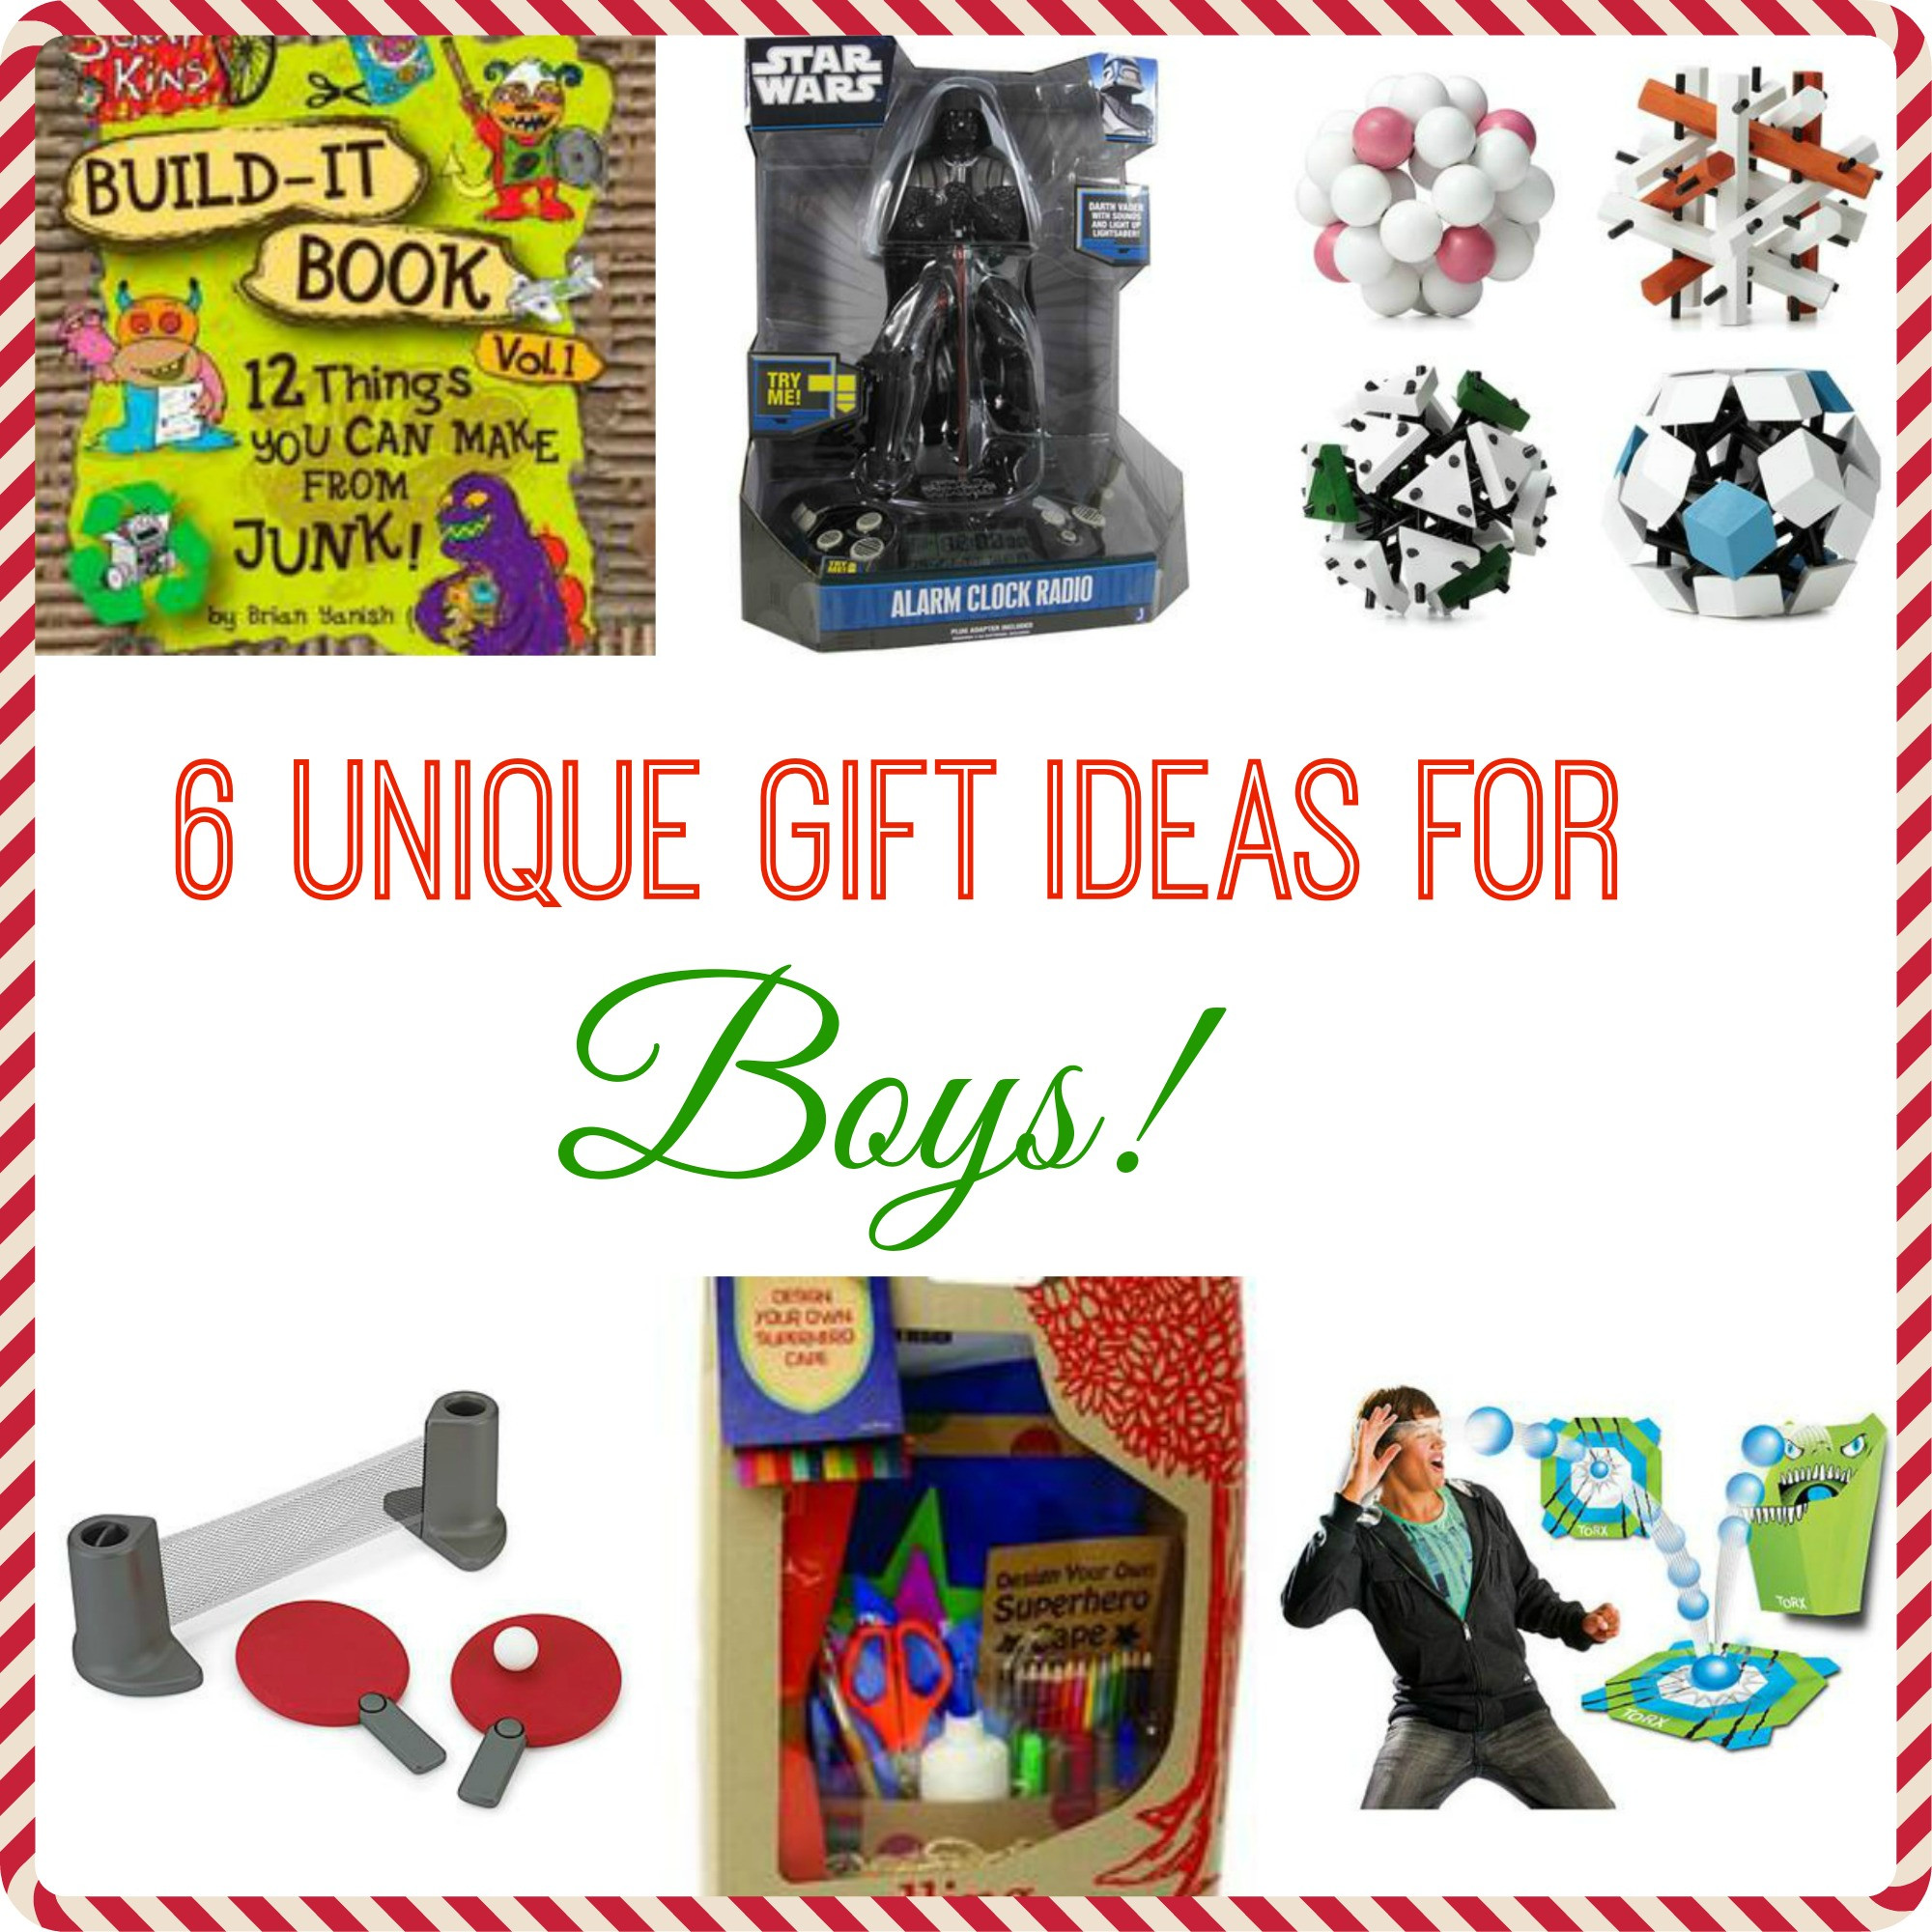 Unique Gift Ideas For Boys
 6 Unique Gift Ideas for Boys